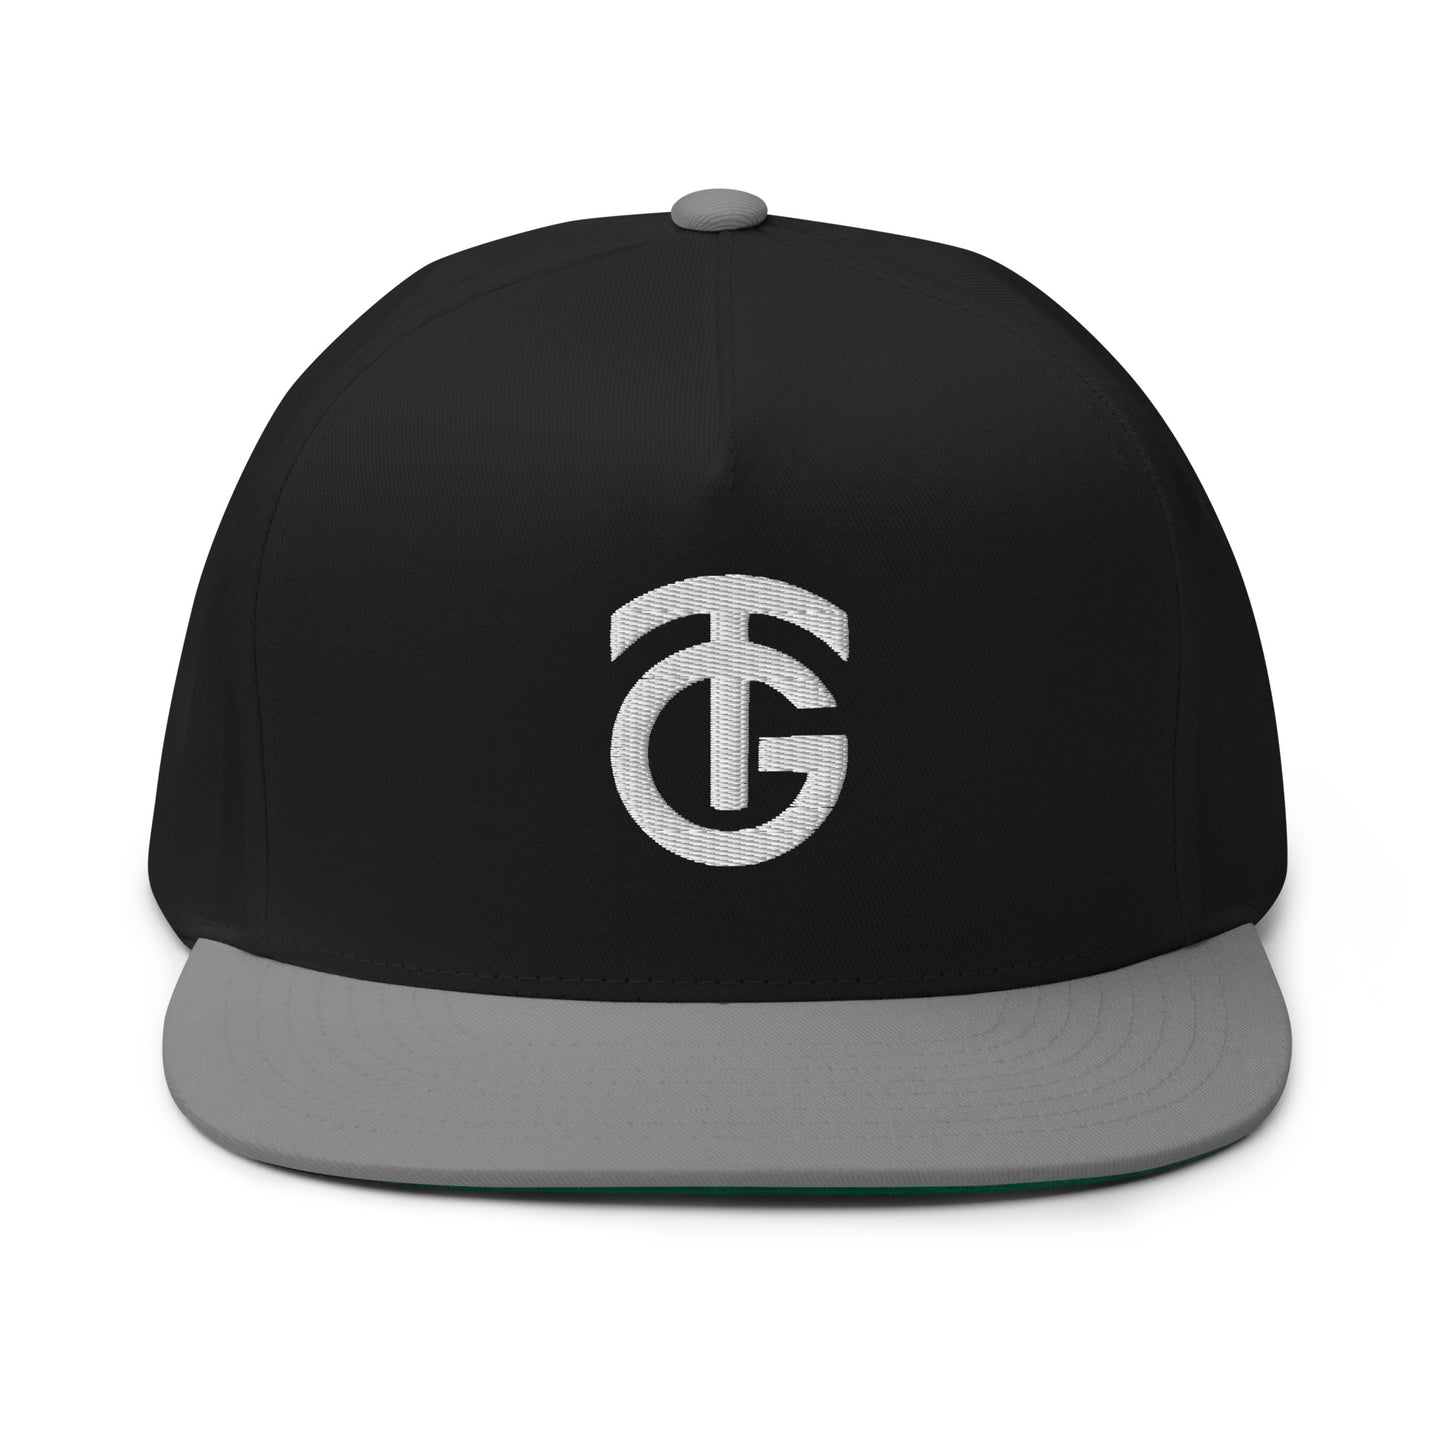 TG Logo Flat Bill Cap